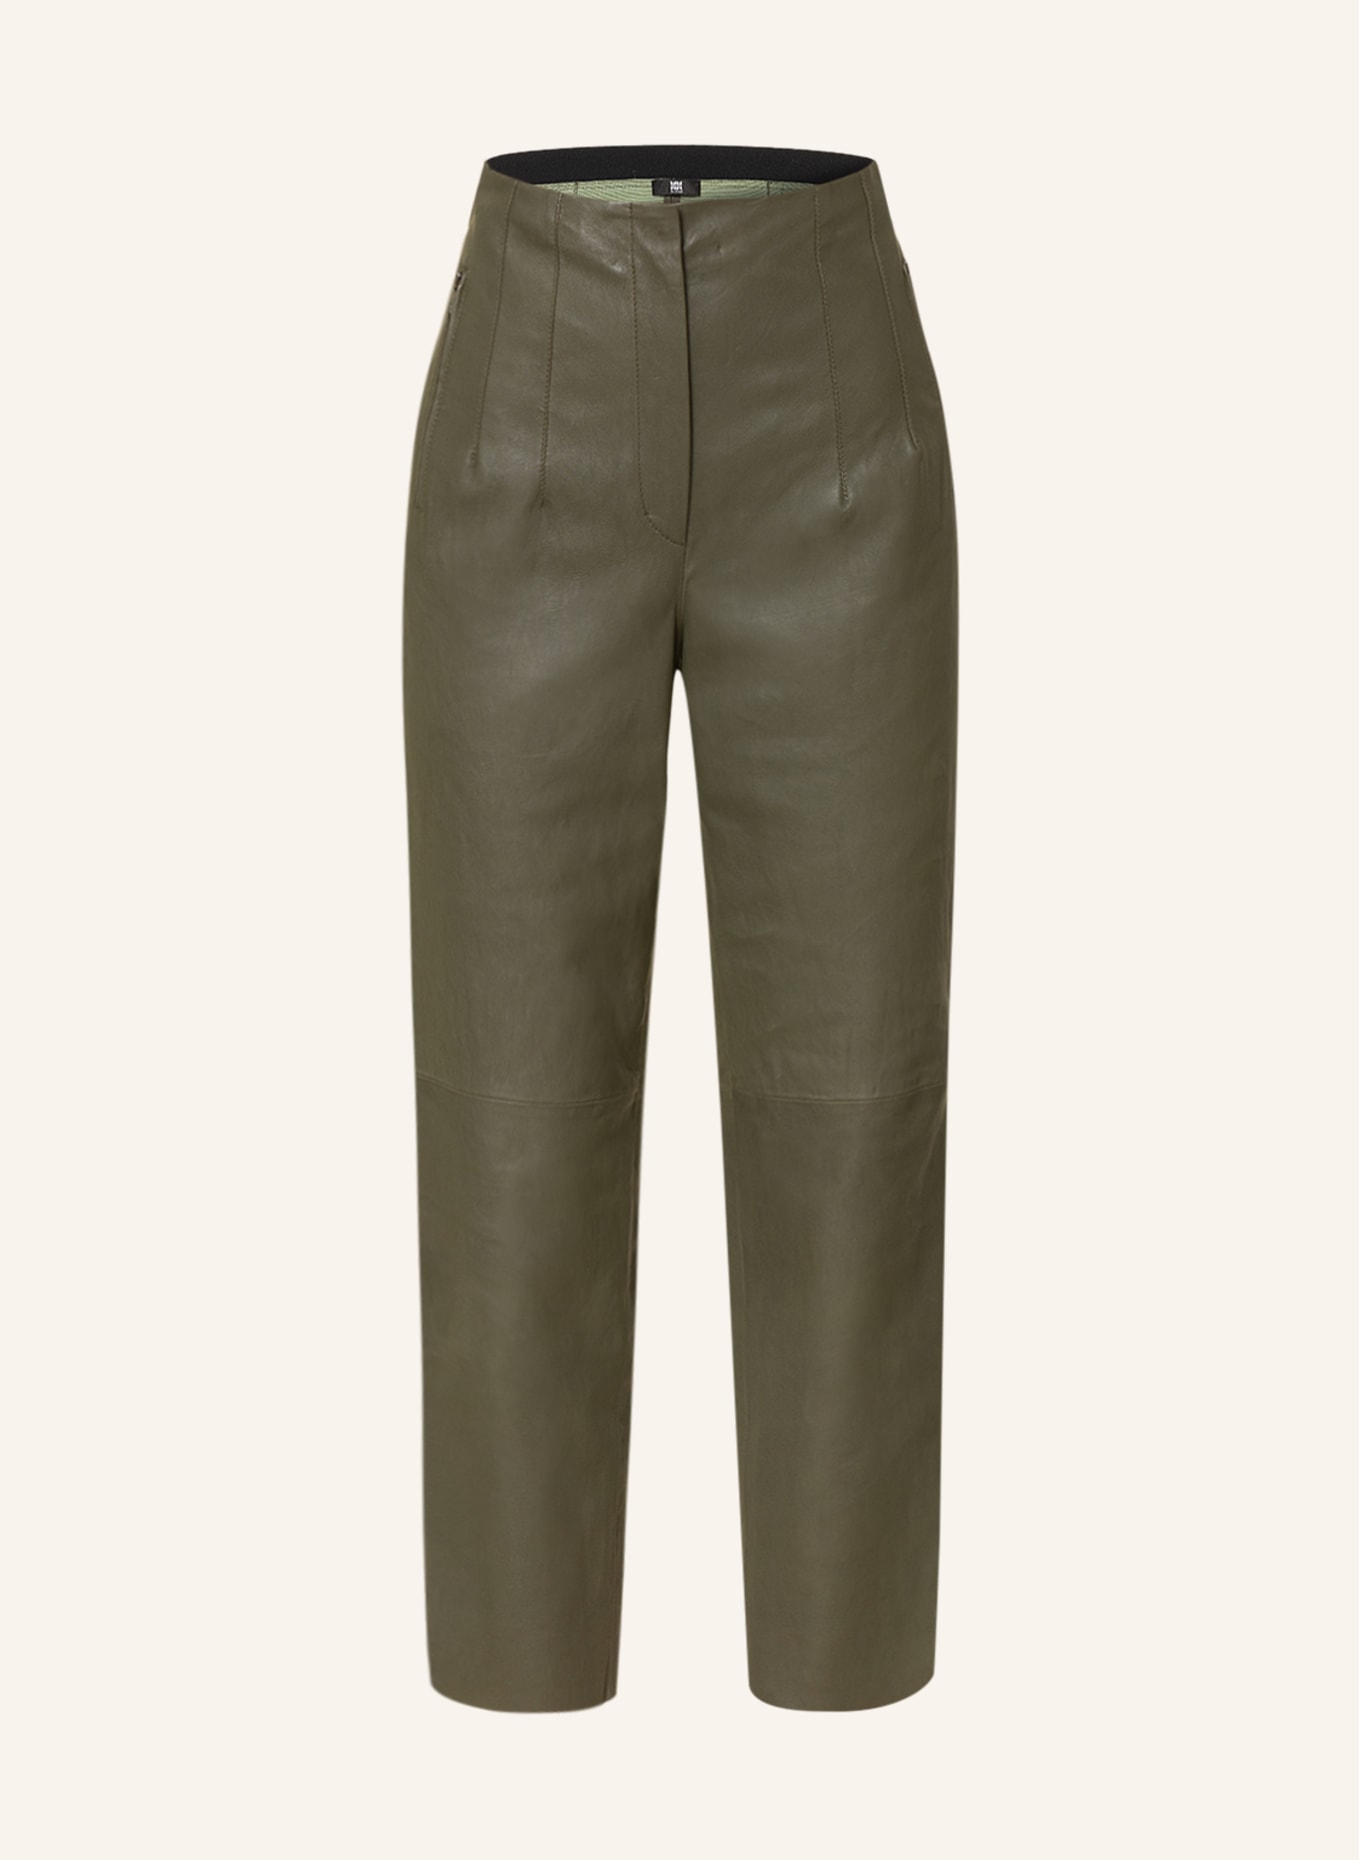 RIANI 7/8 trousers made of leather, Color: KHAKI (Image 1)